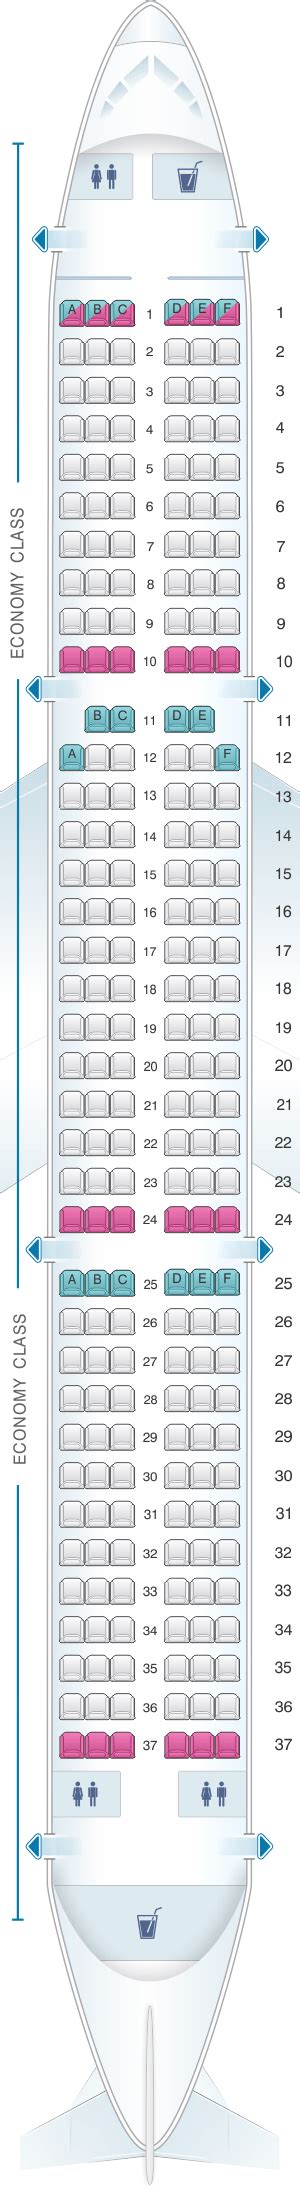 Jetstar 787 Seat Map